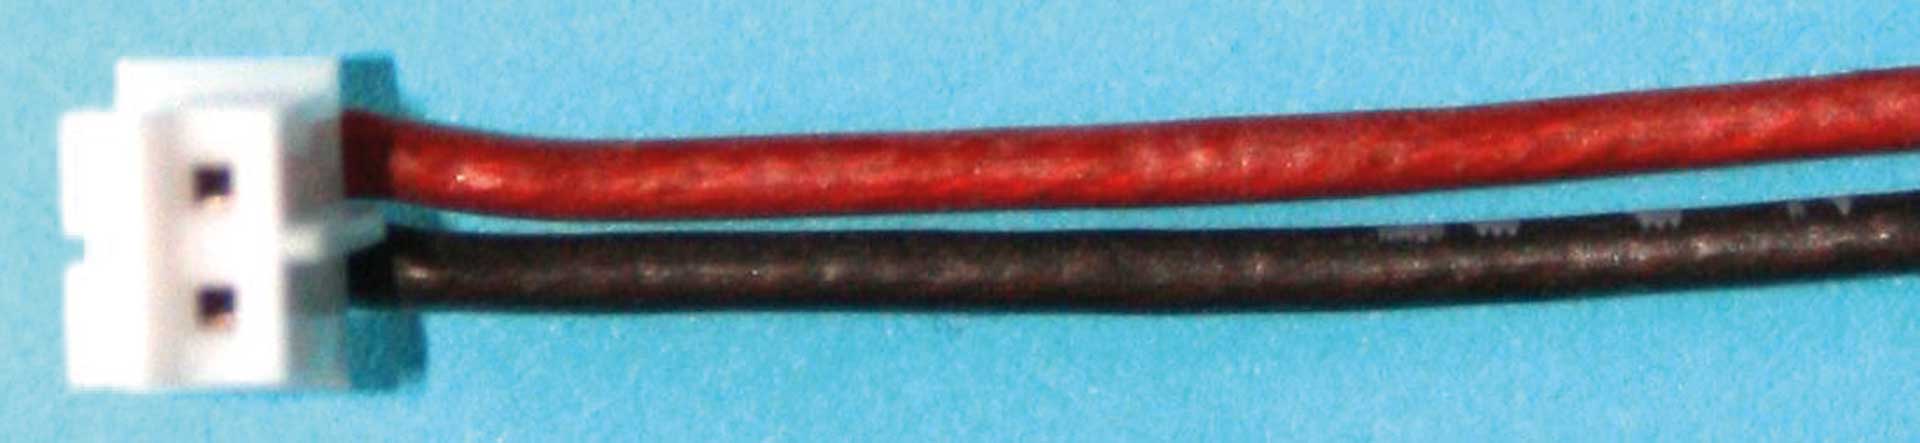 MULDENTAL Buchsenkabel 2-polig PH 0,25mm² 30cm